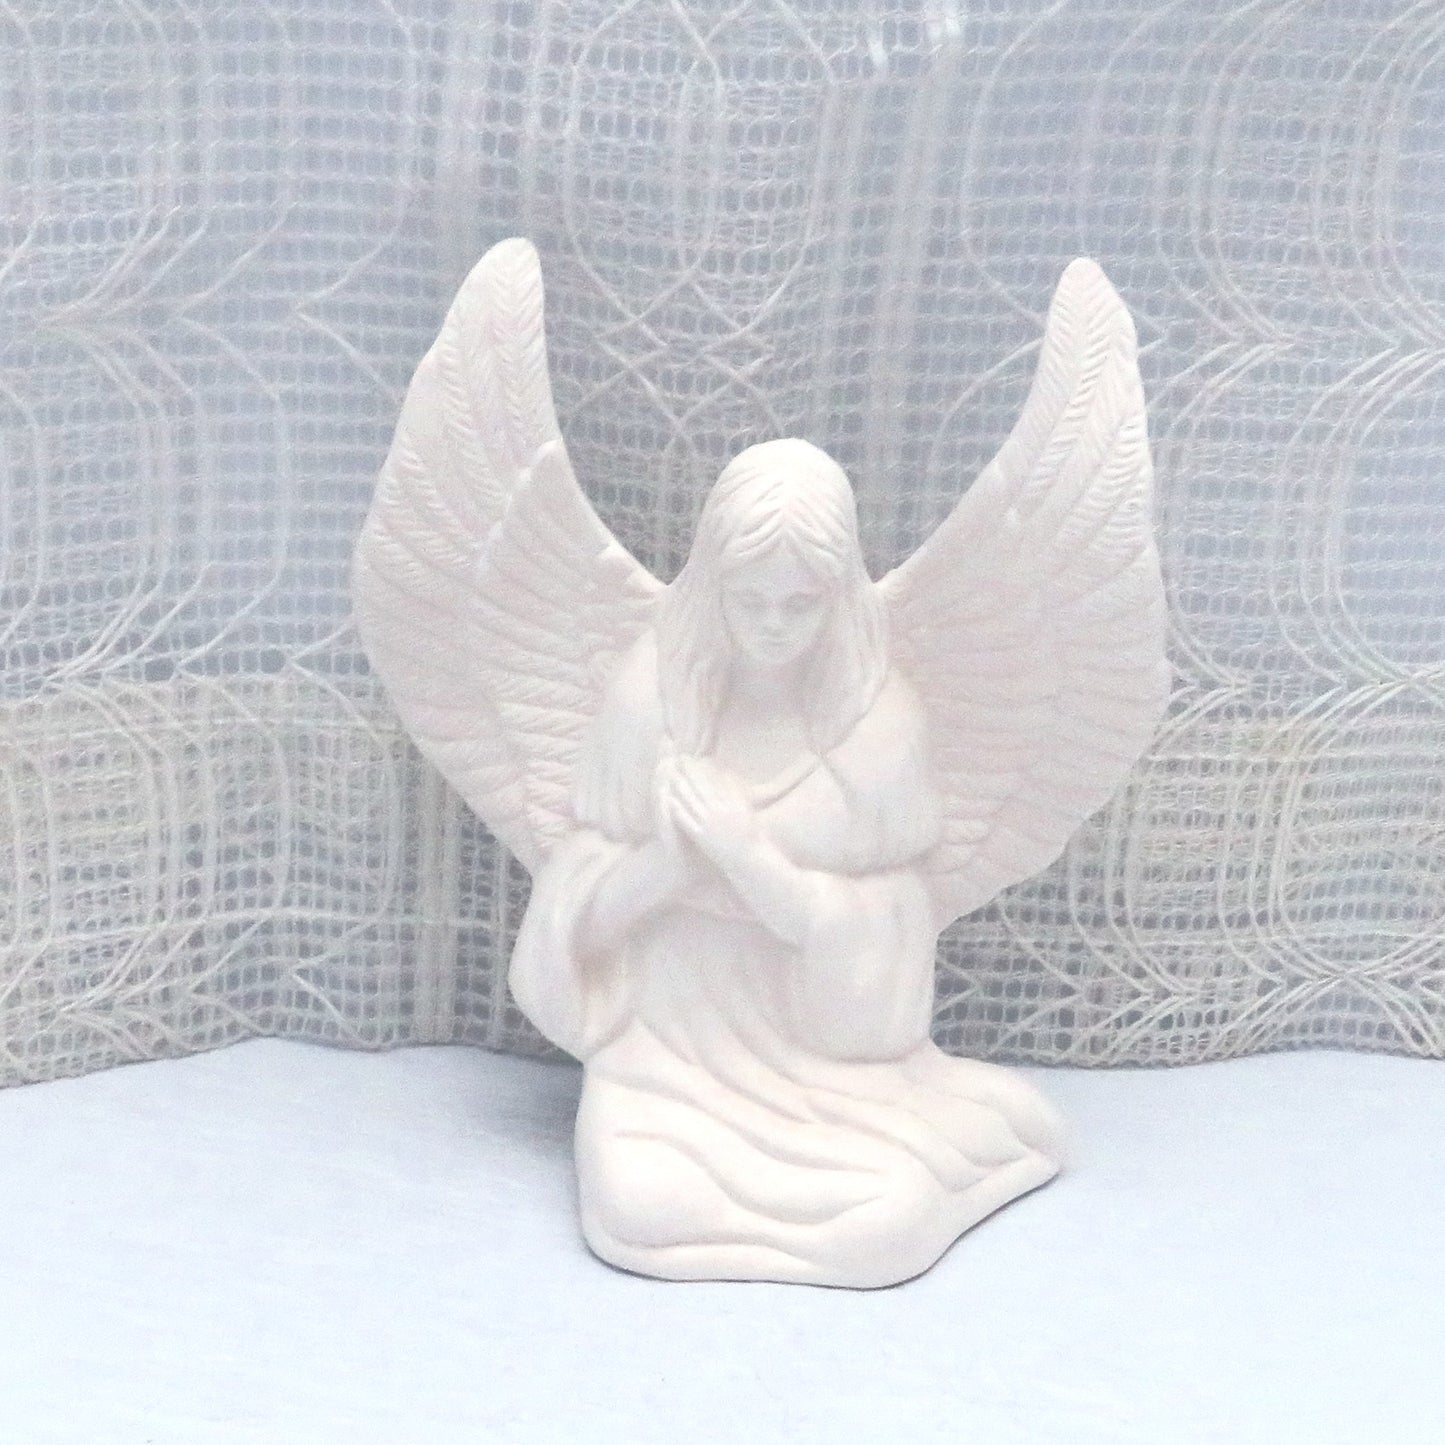 Handmade Ready to Paint Ceramic Side Sitting Angel Figurine, Unpainted Ceramic Bisque Angel Figurine